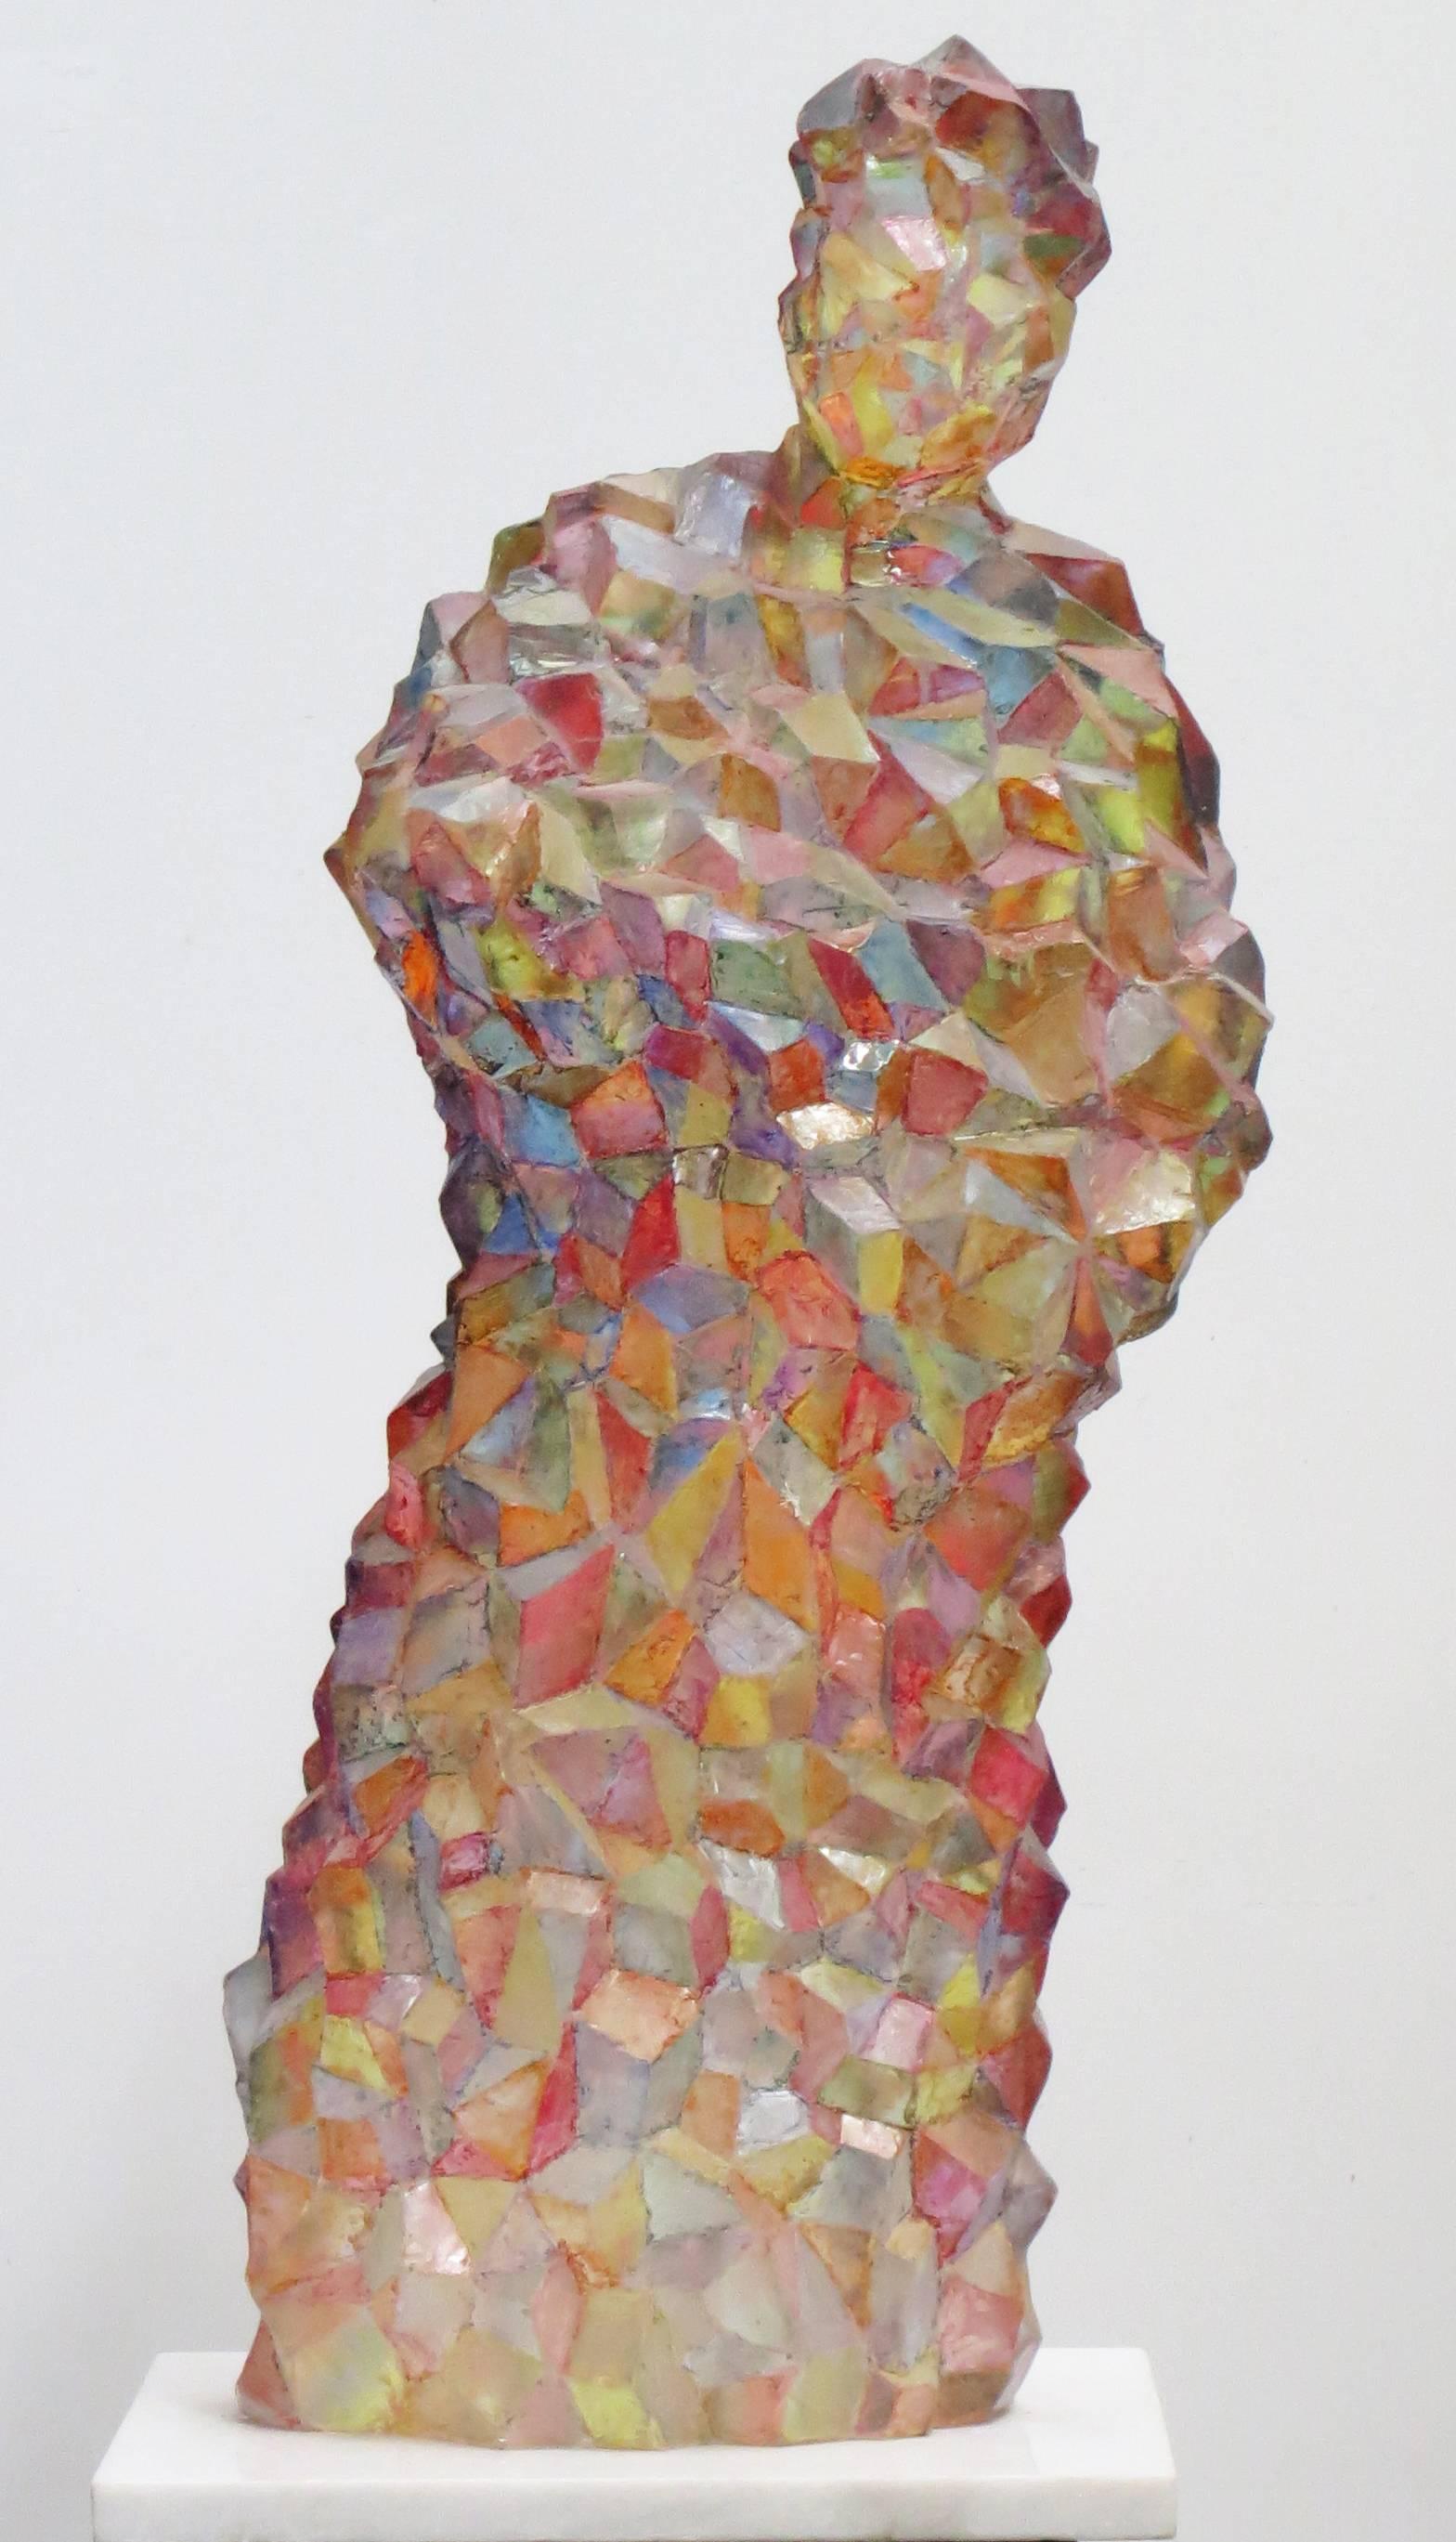 Howard Kalish Figurative Sculpture - "Joseph", old testament figure in his translucent, cubist coat of many colors, 